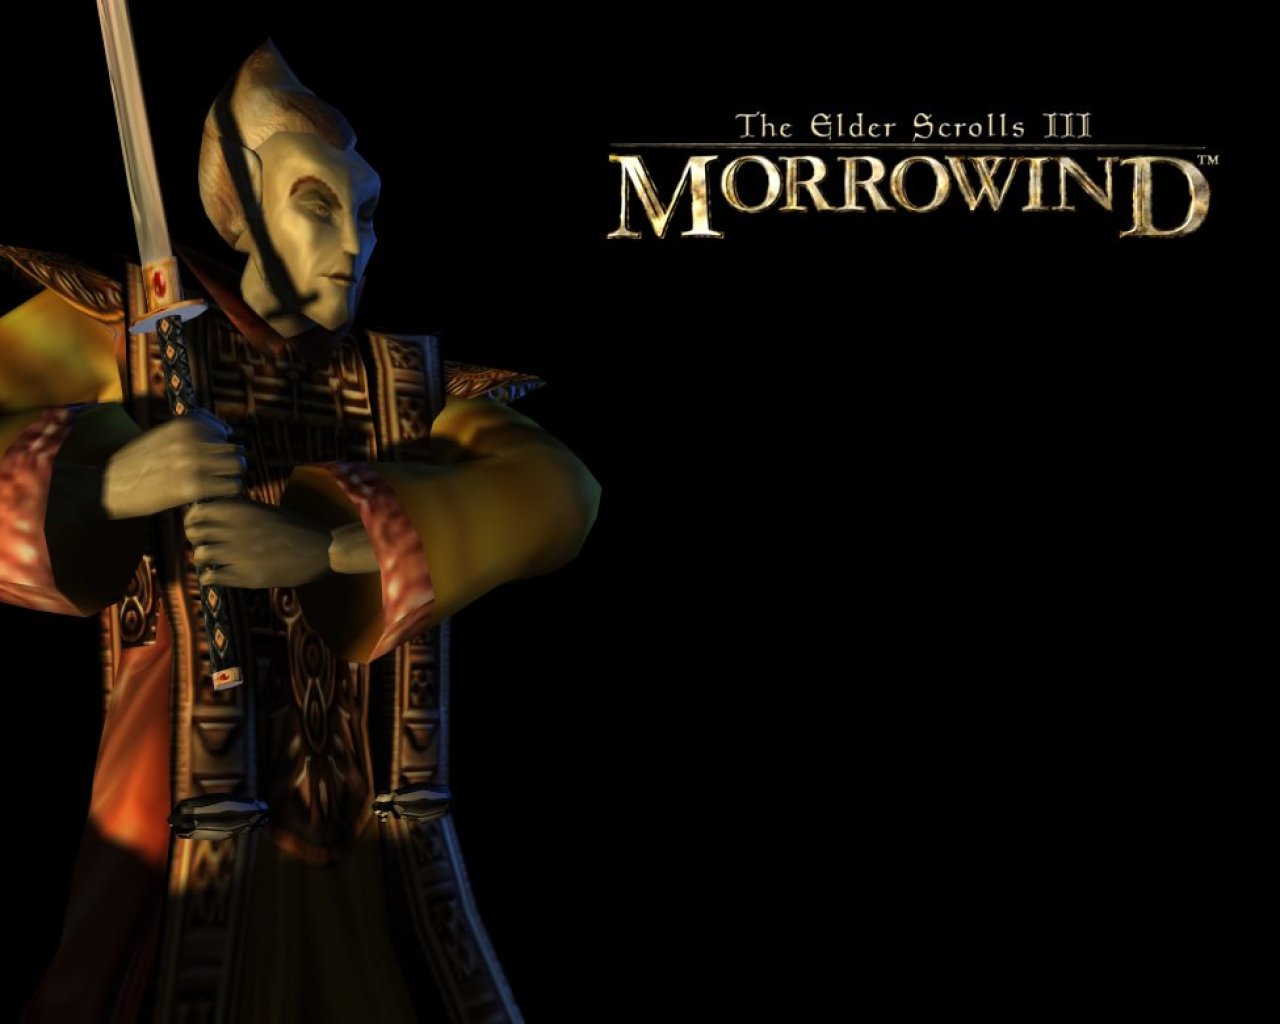 The Elder Scrolls III: Morrowind - PC Game Trainer Cheat